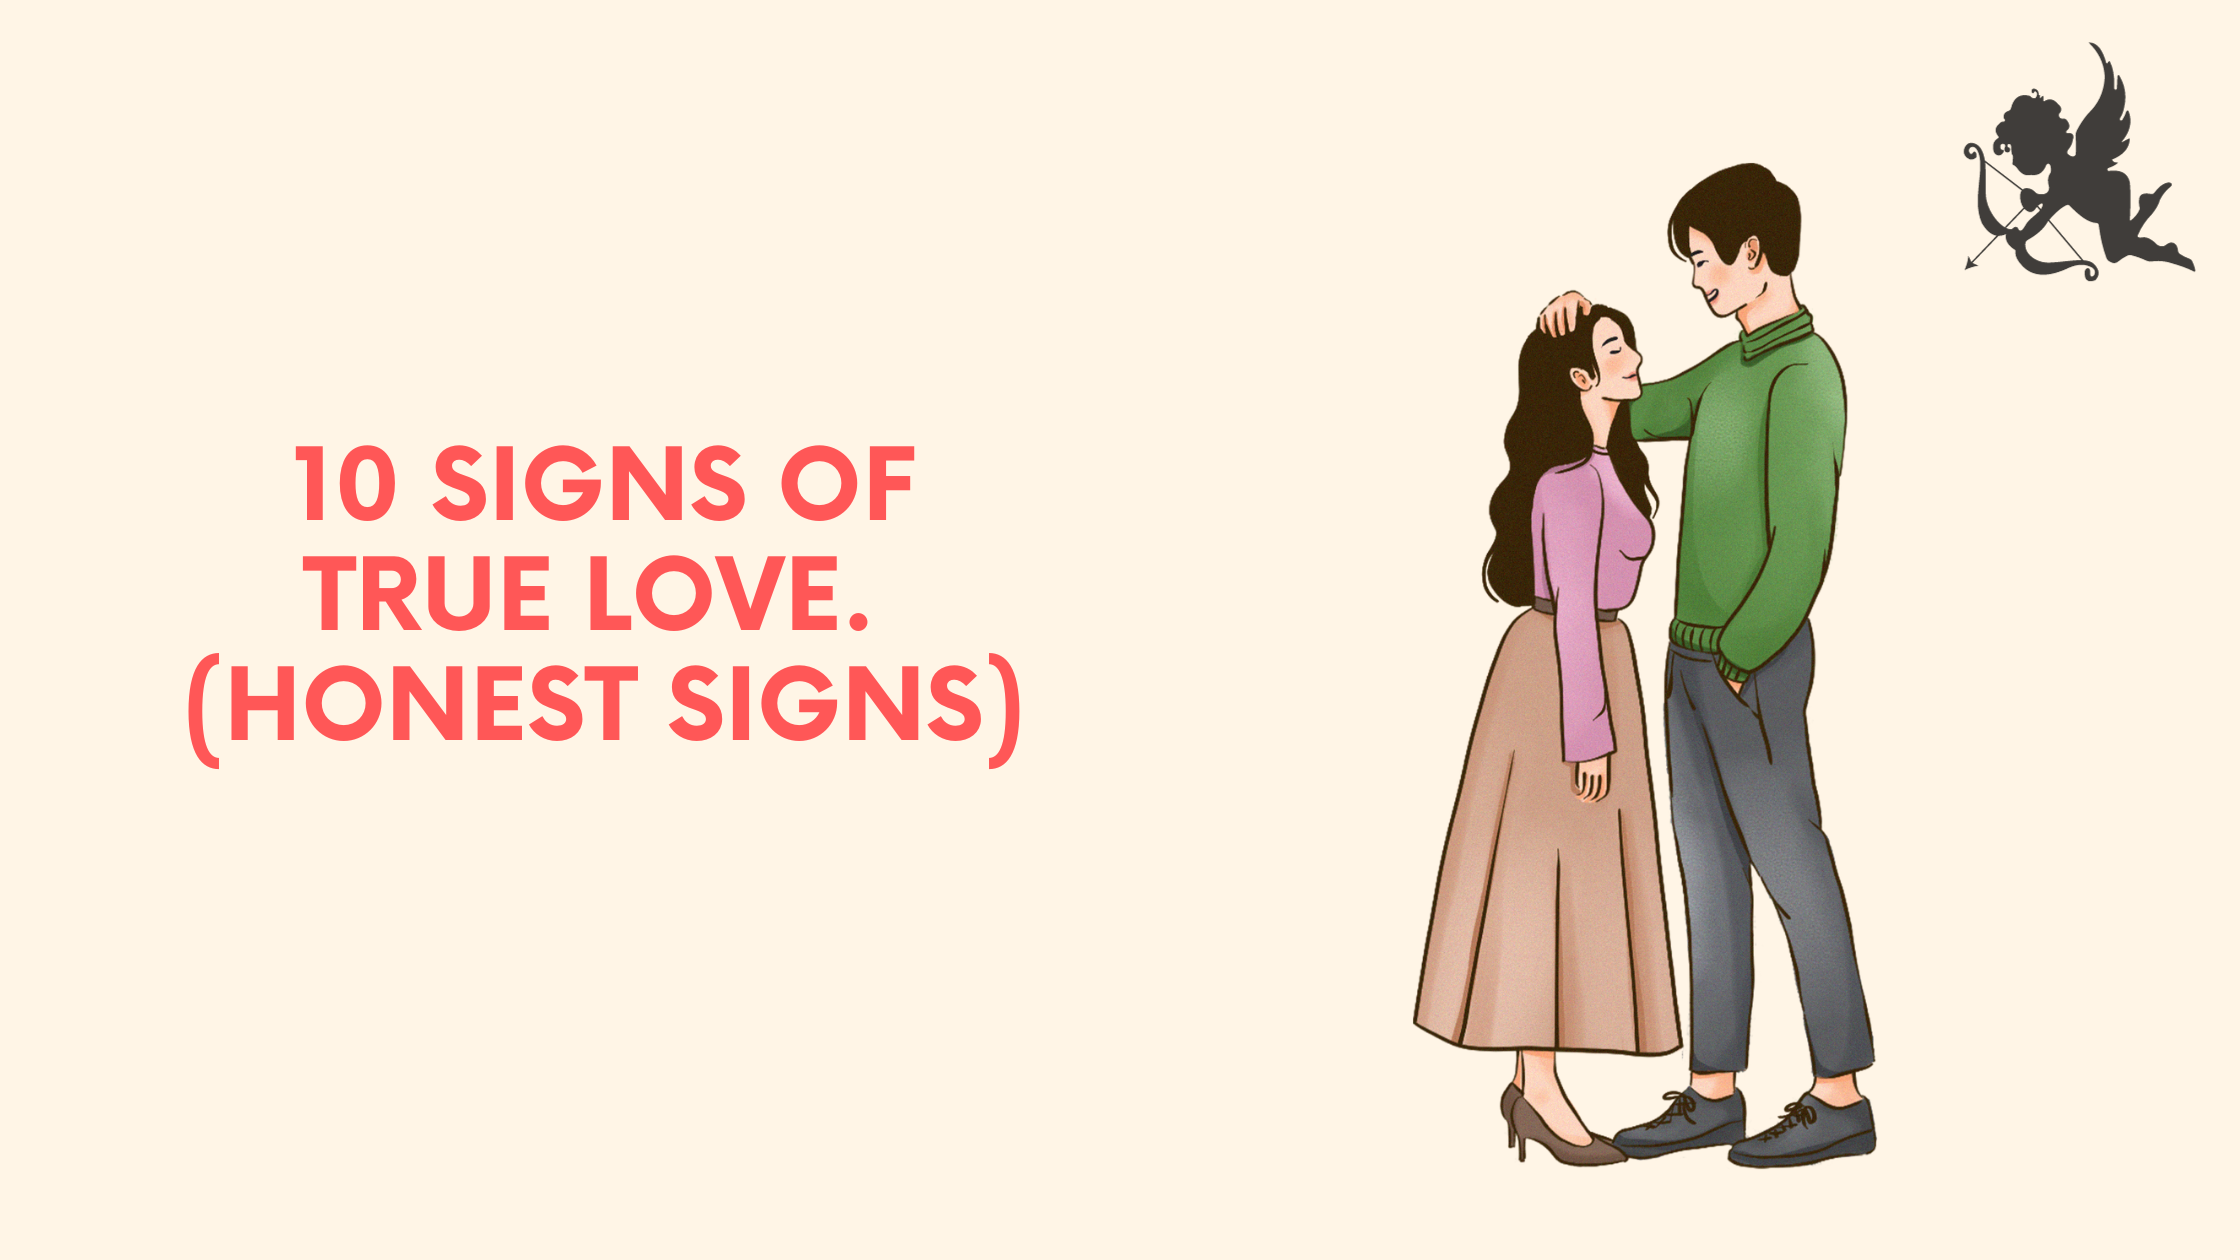 10 Signs of True Love.